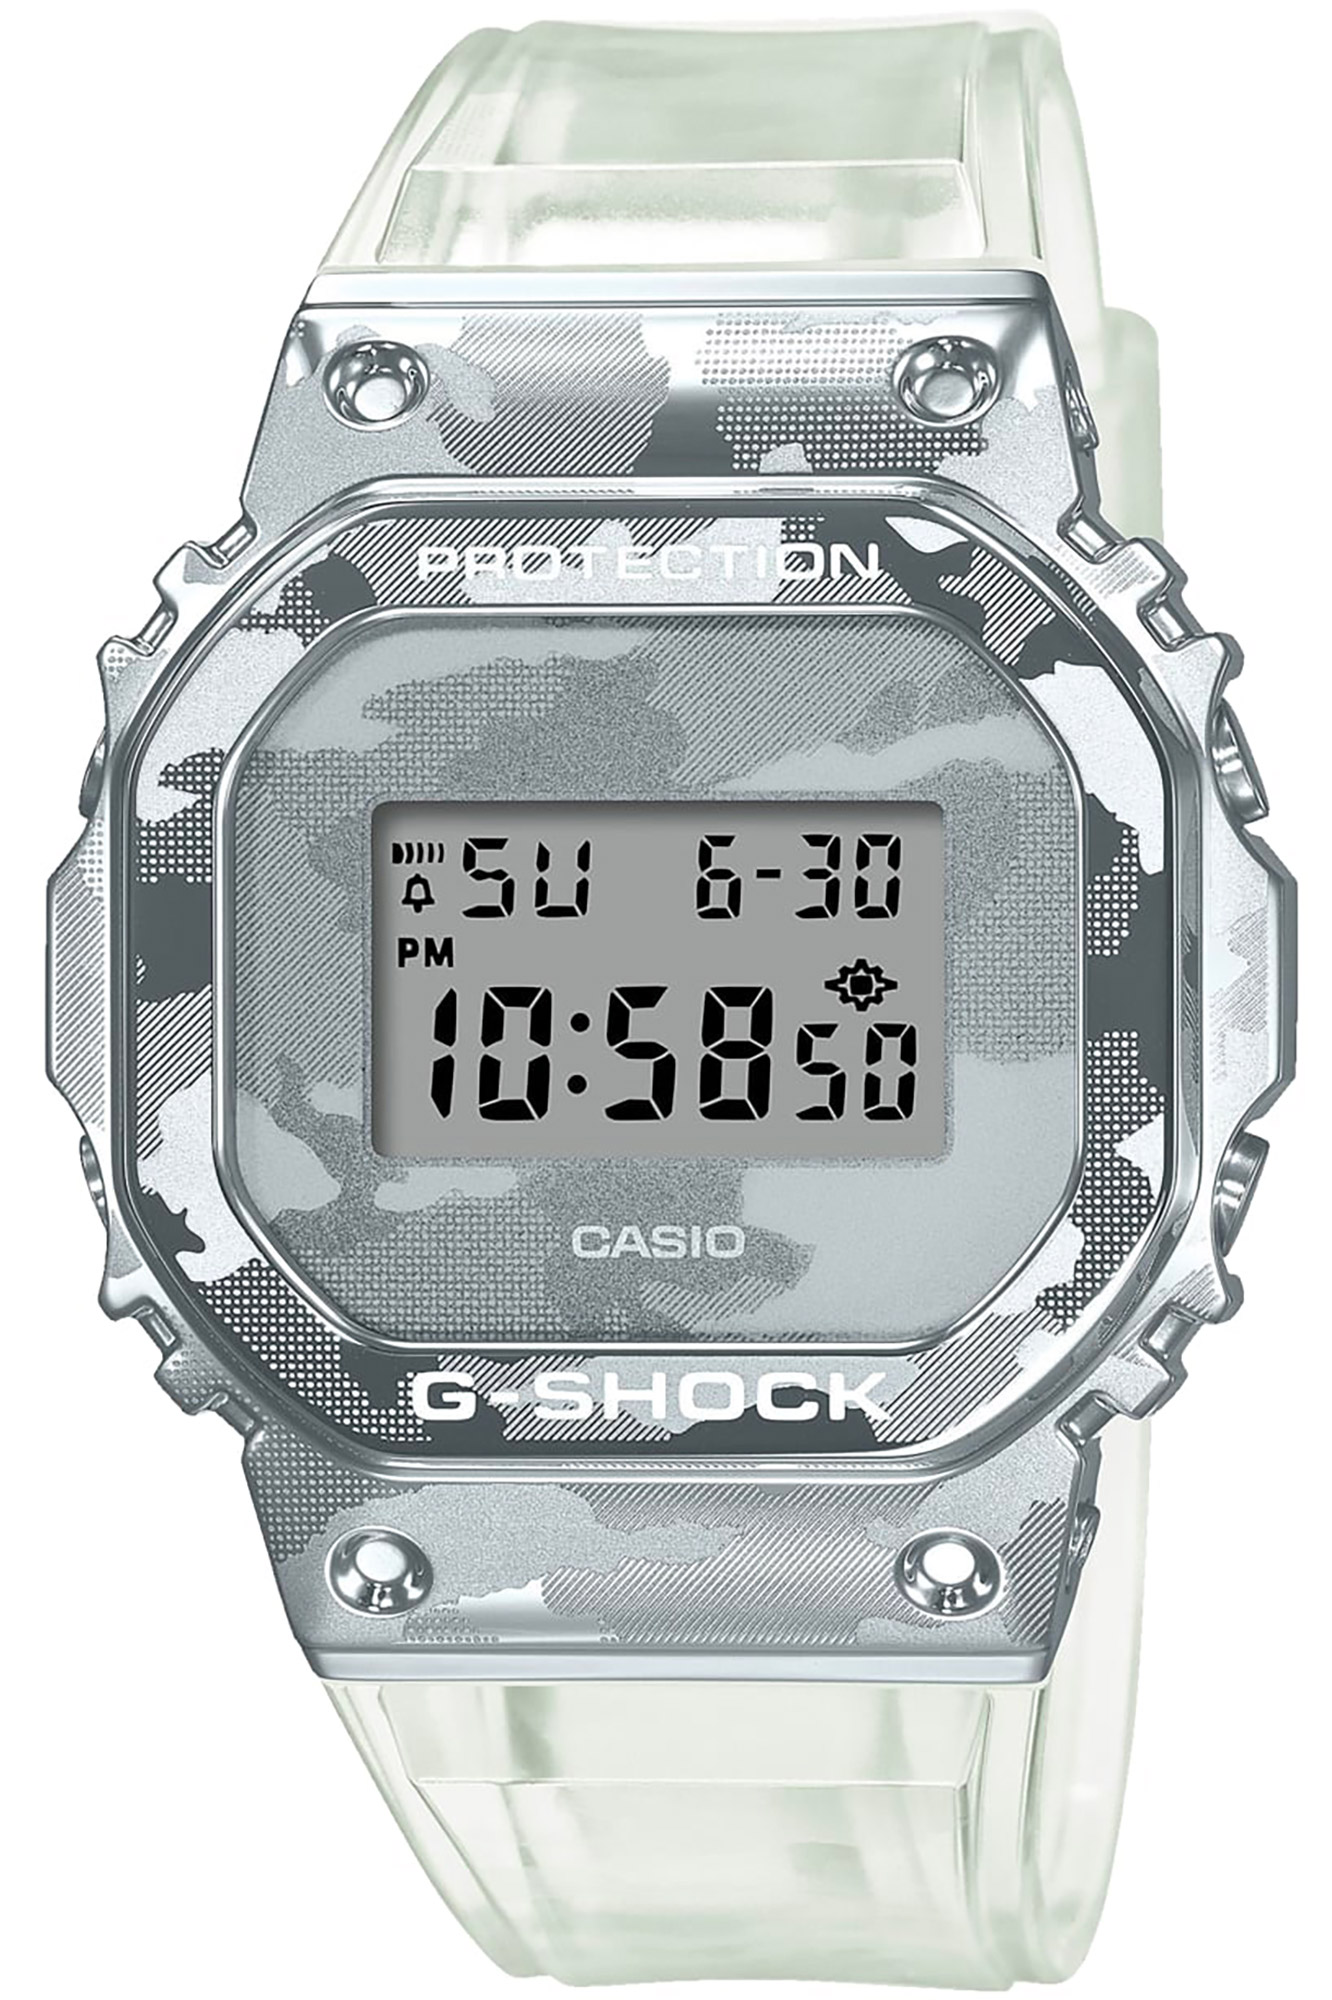 Orologio CASIO G-Shock gm-5600scm-1er